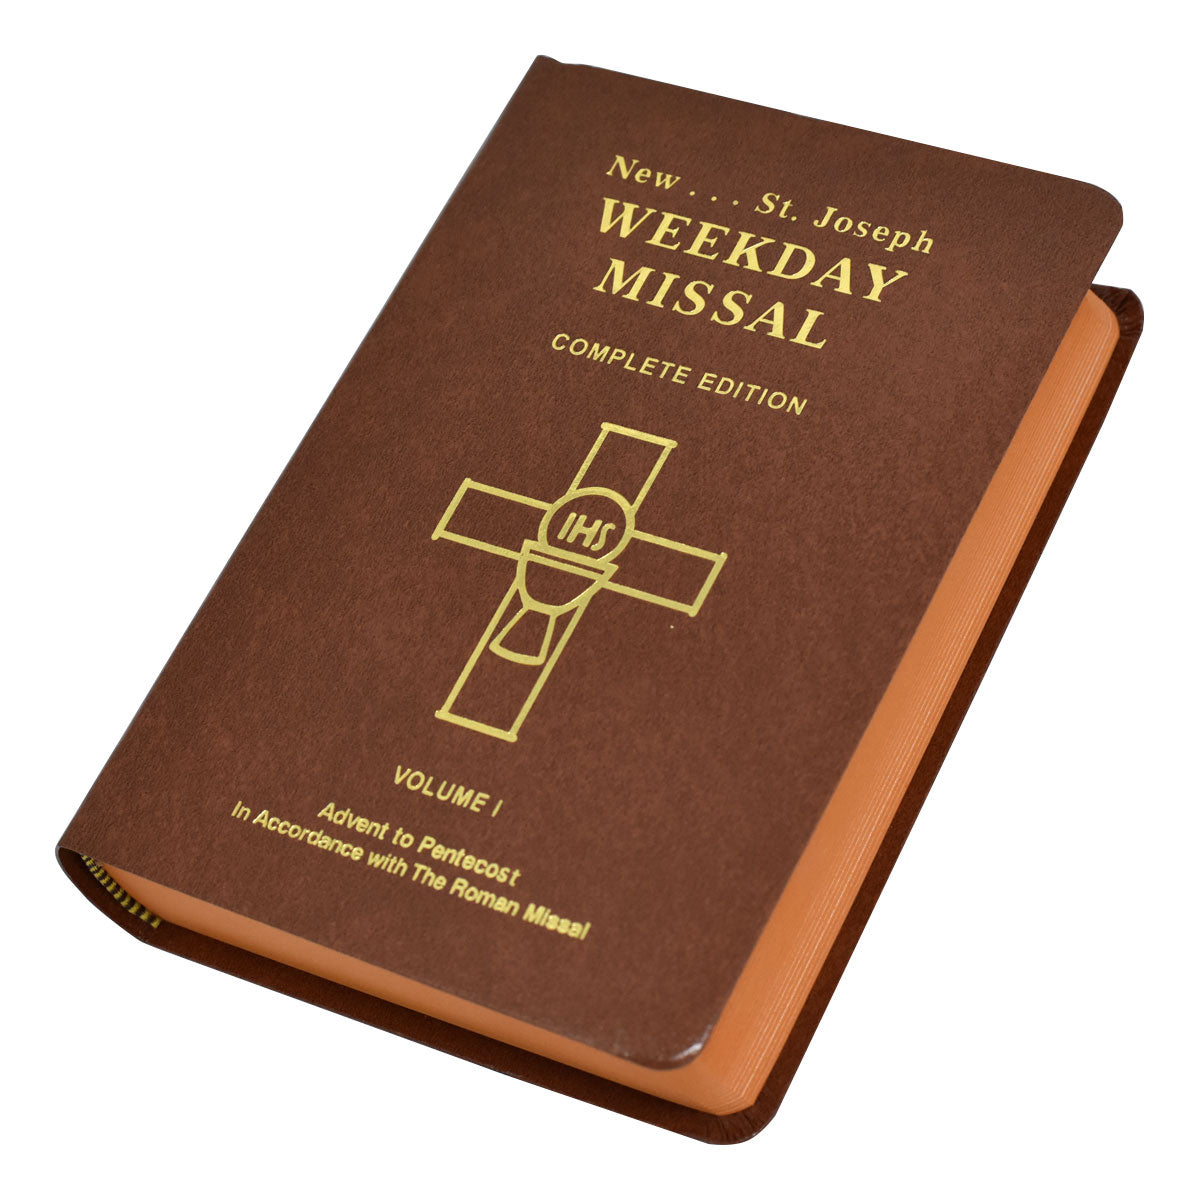 St. Joseph Weekday Missal (Vol. I / Advent To Pentecost)